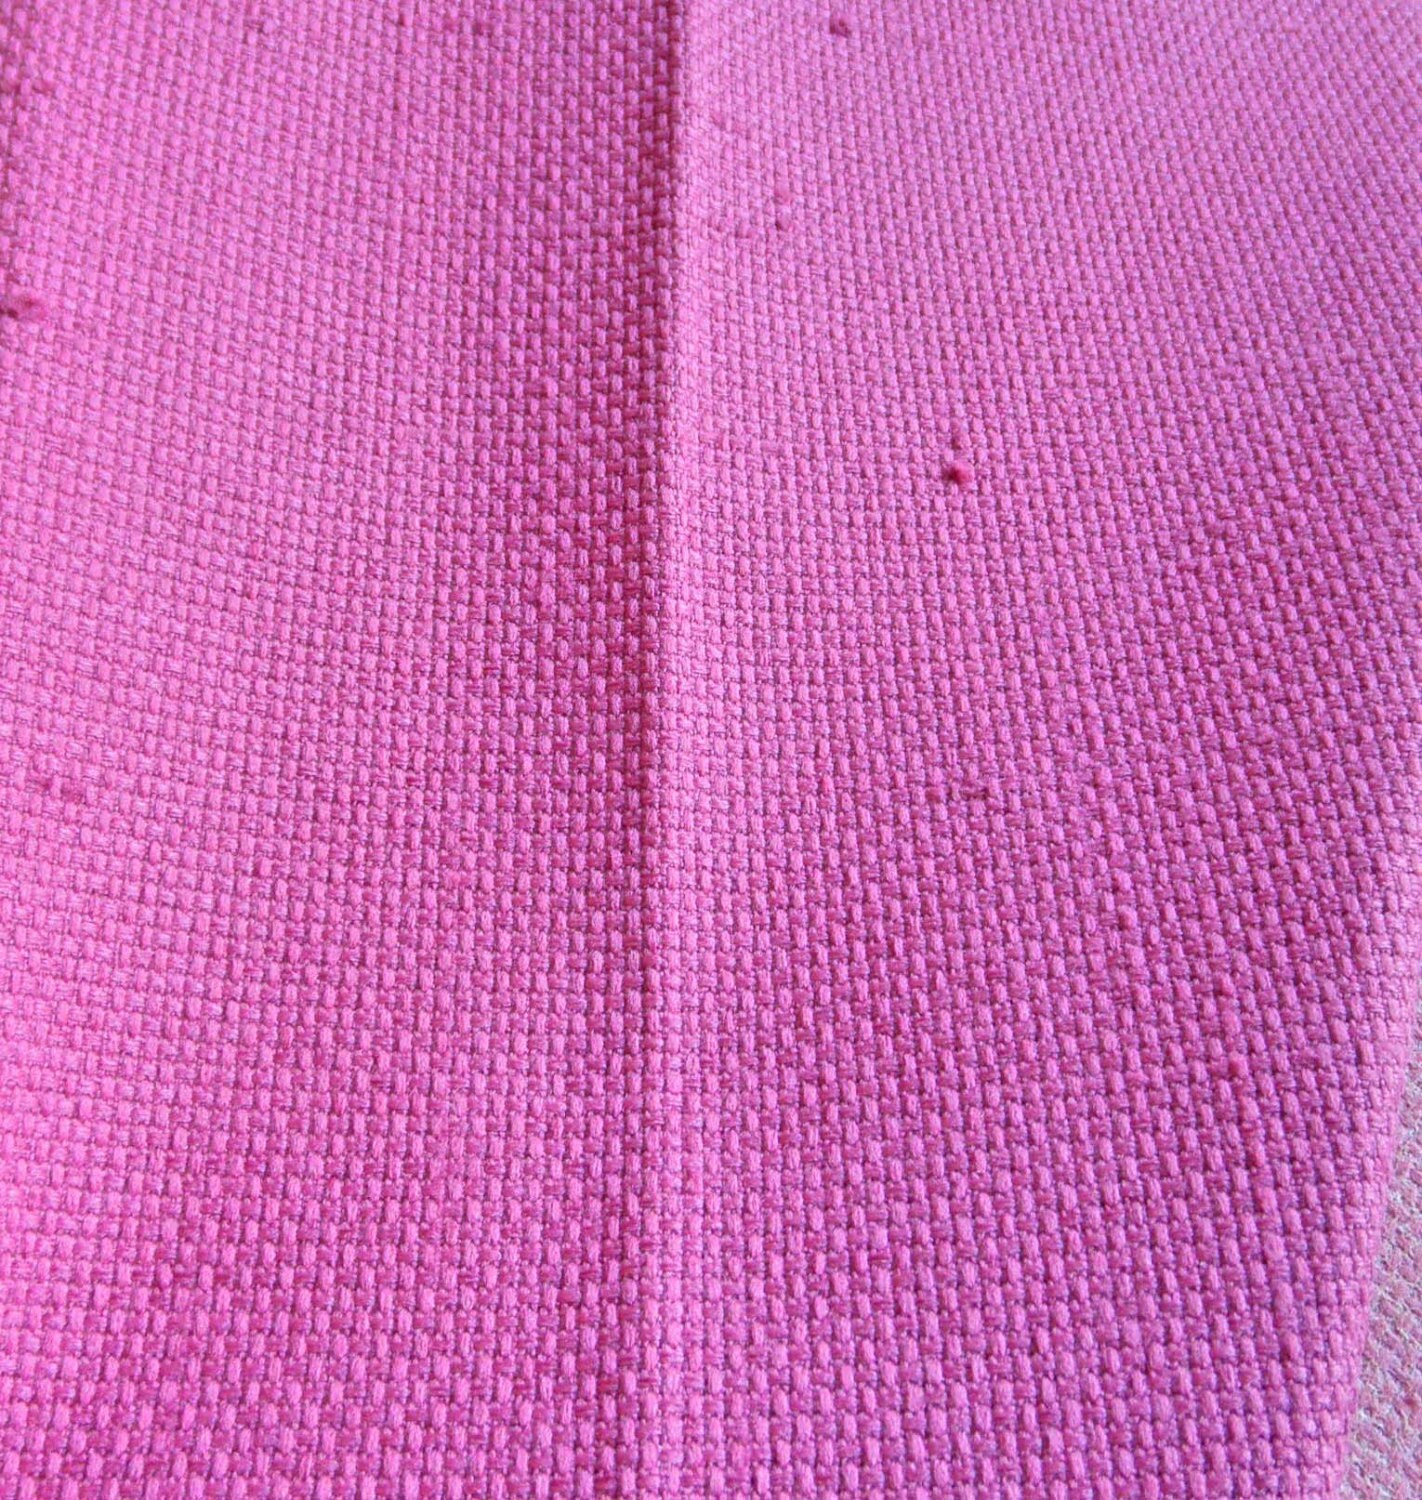 Upholstery Fabric FUSHIA PINK Tweed Polly Cotton Blend 3 1/2 - Etsy UK